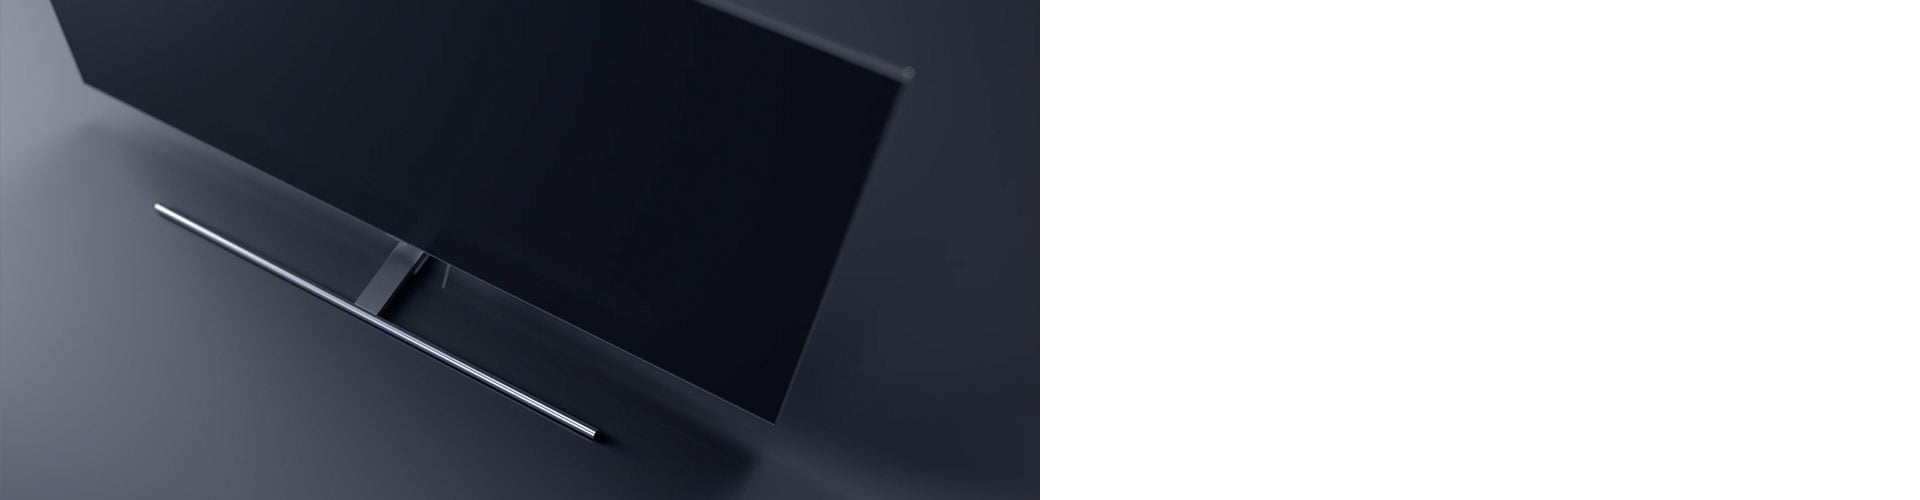 Samsung new QLED TV 3D design video Thumbnail.